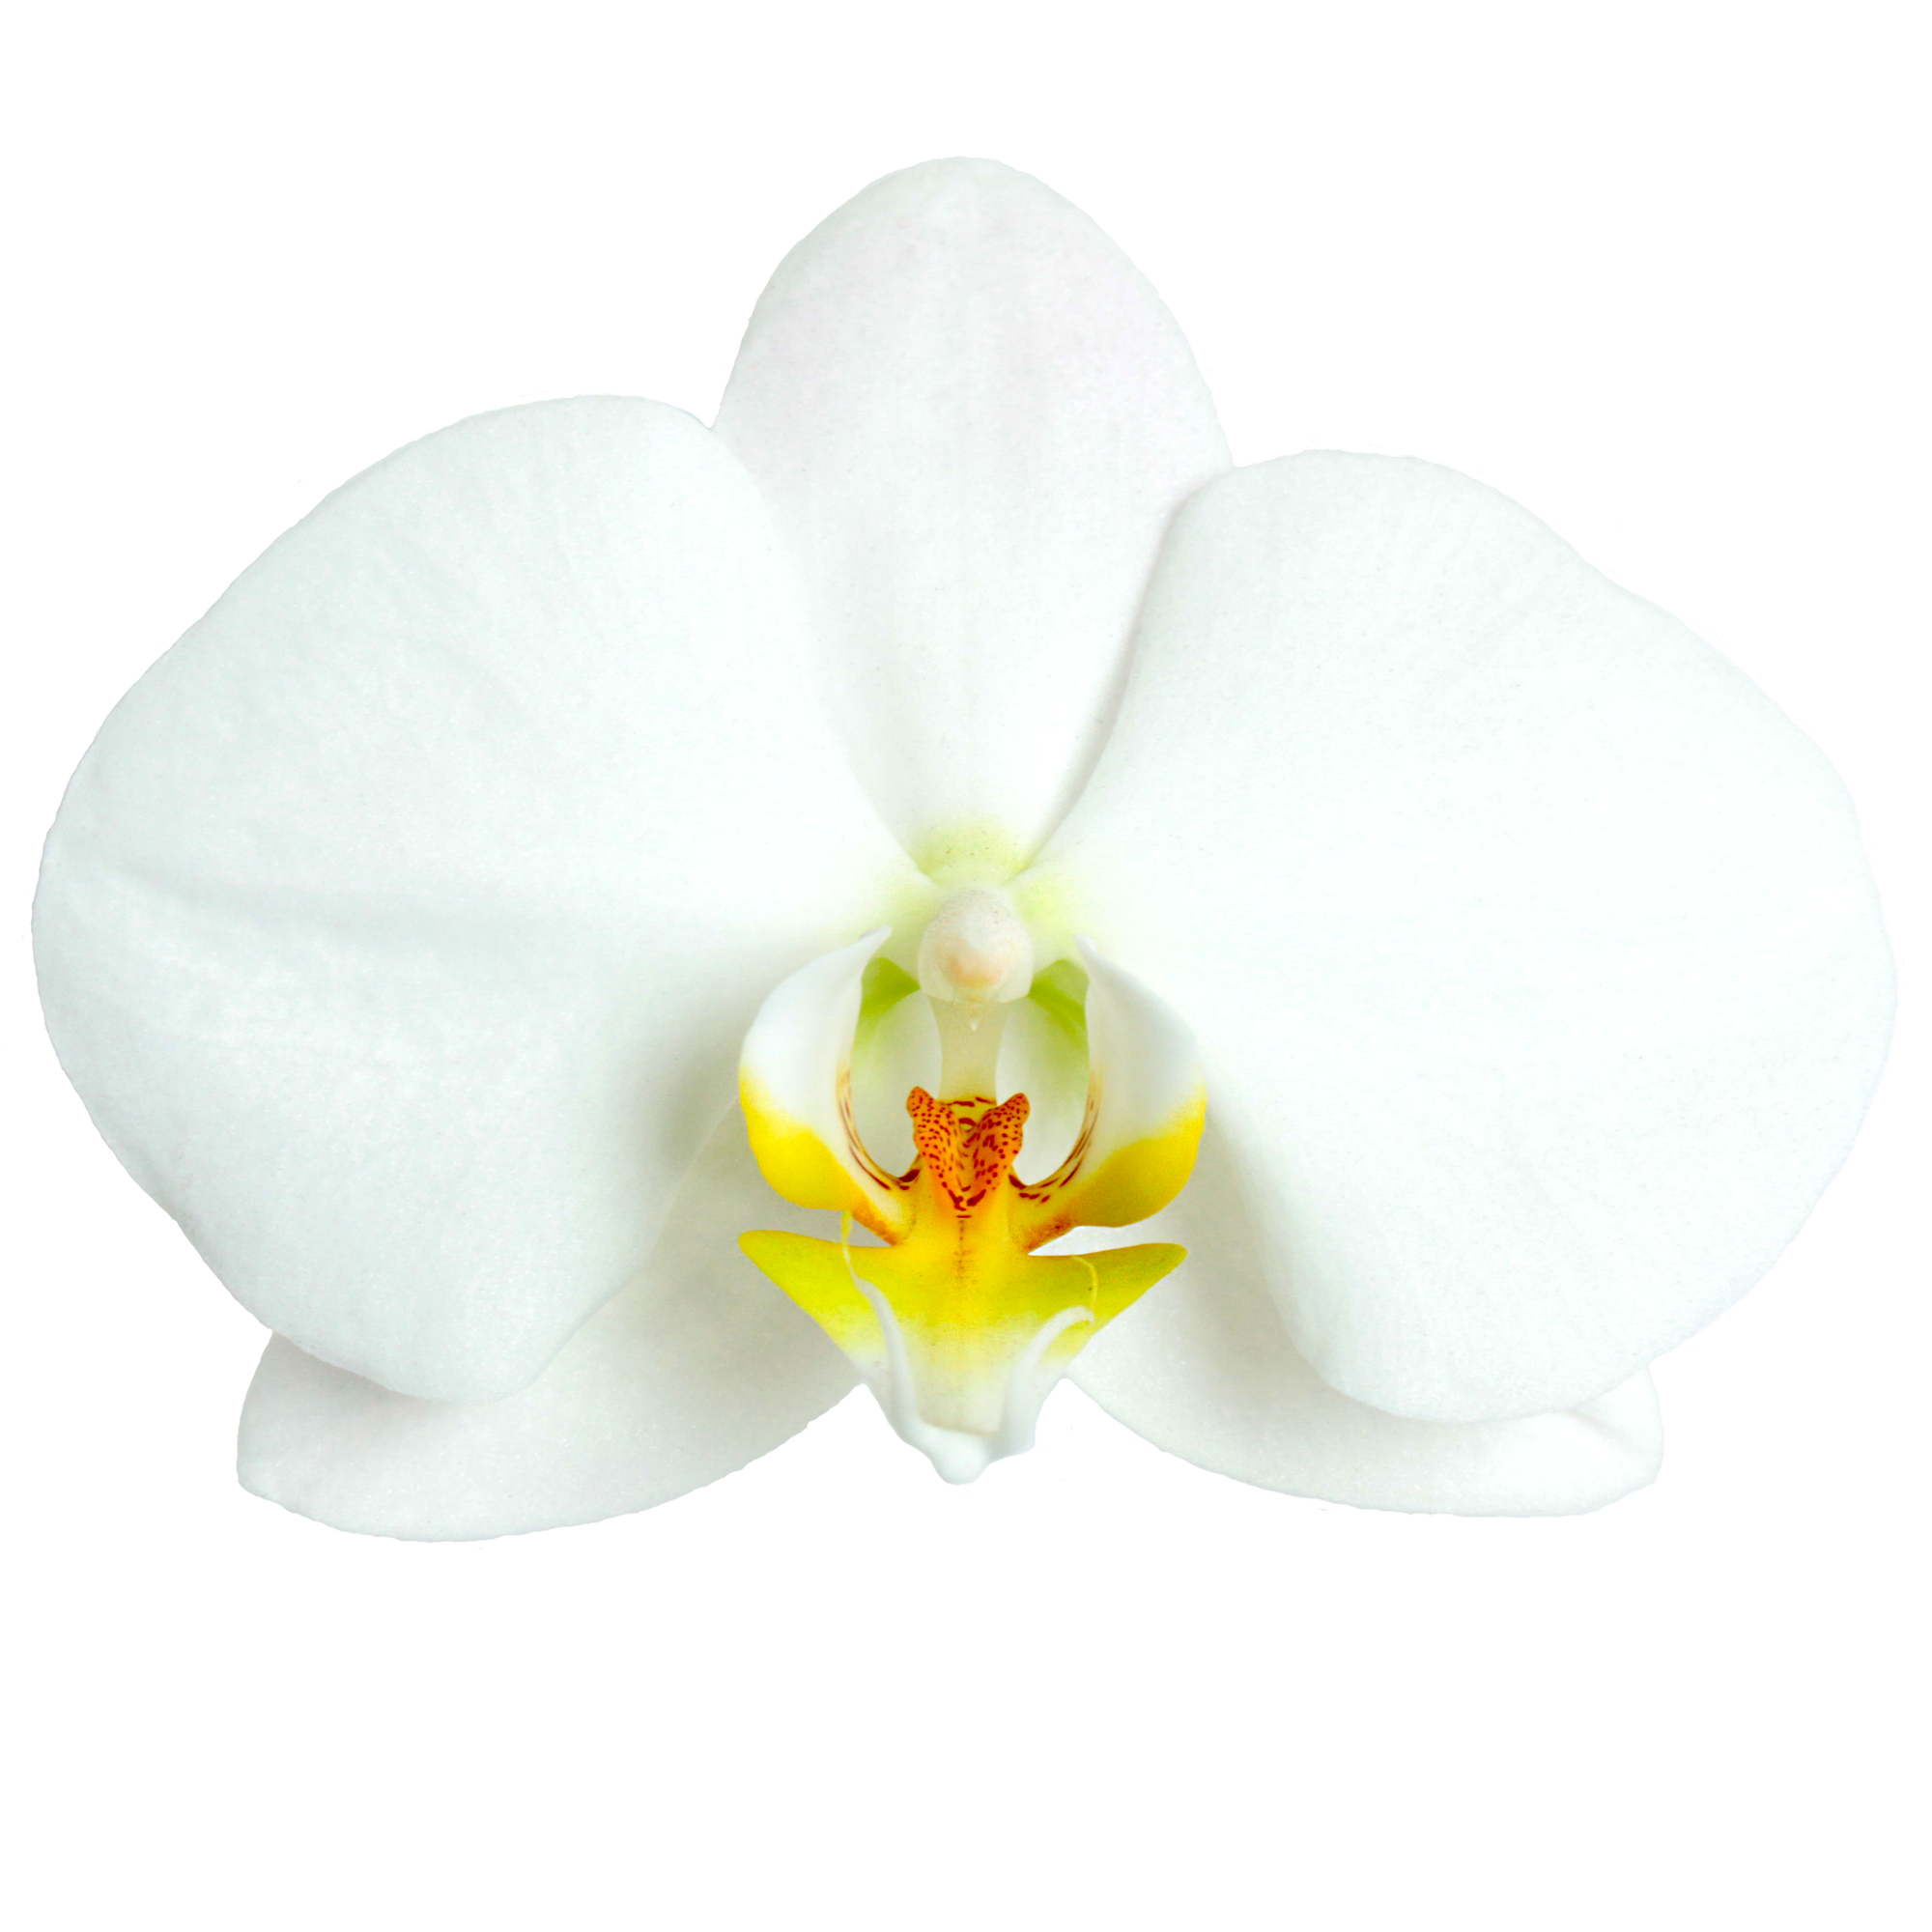 Schmetterlingsorchidee 2 Rispen weiß mit gelbem Auge 12 cm Topf + product picture